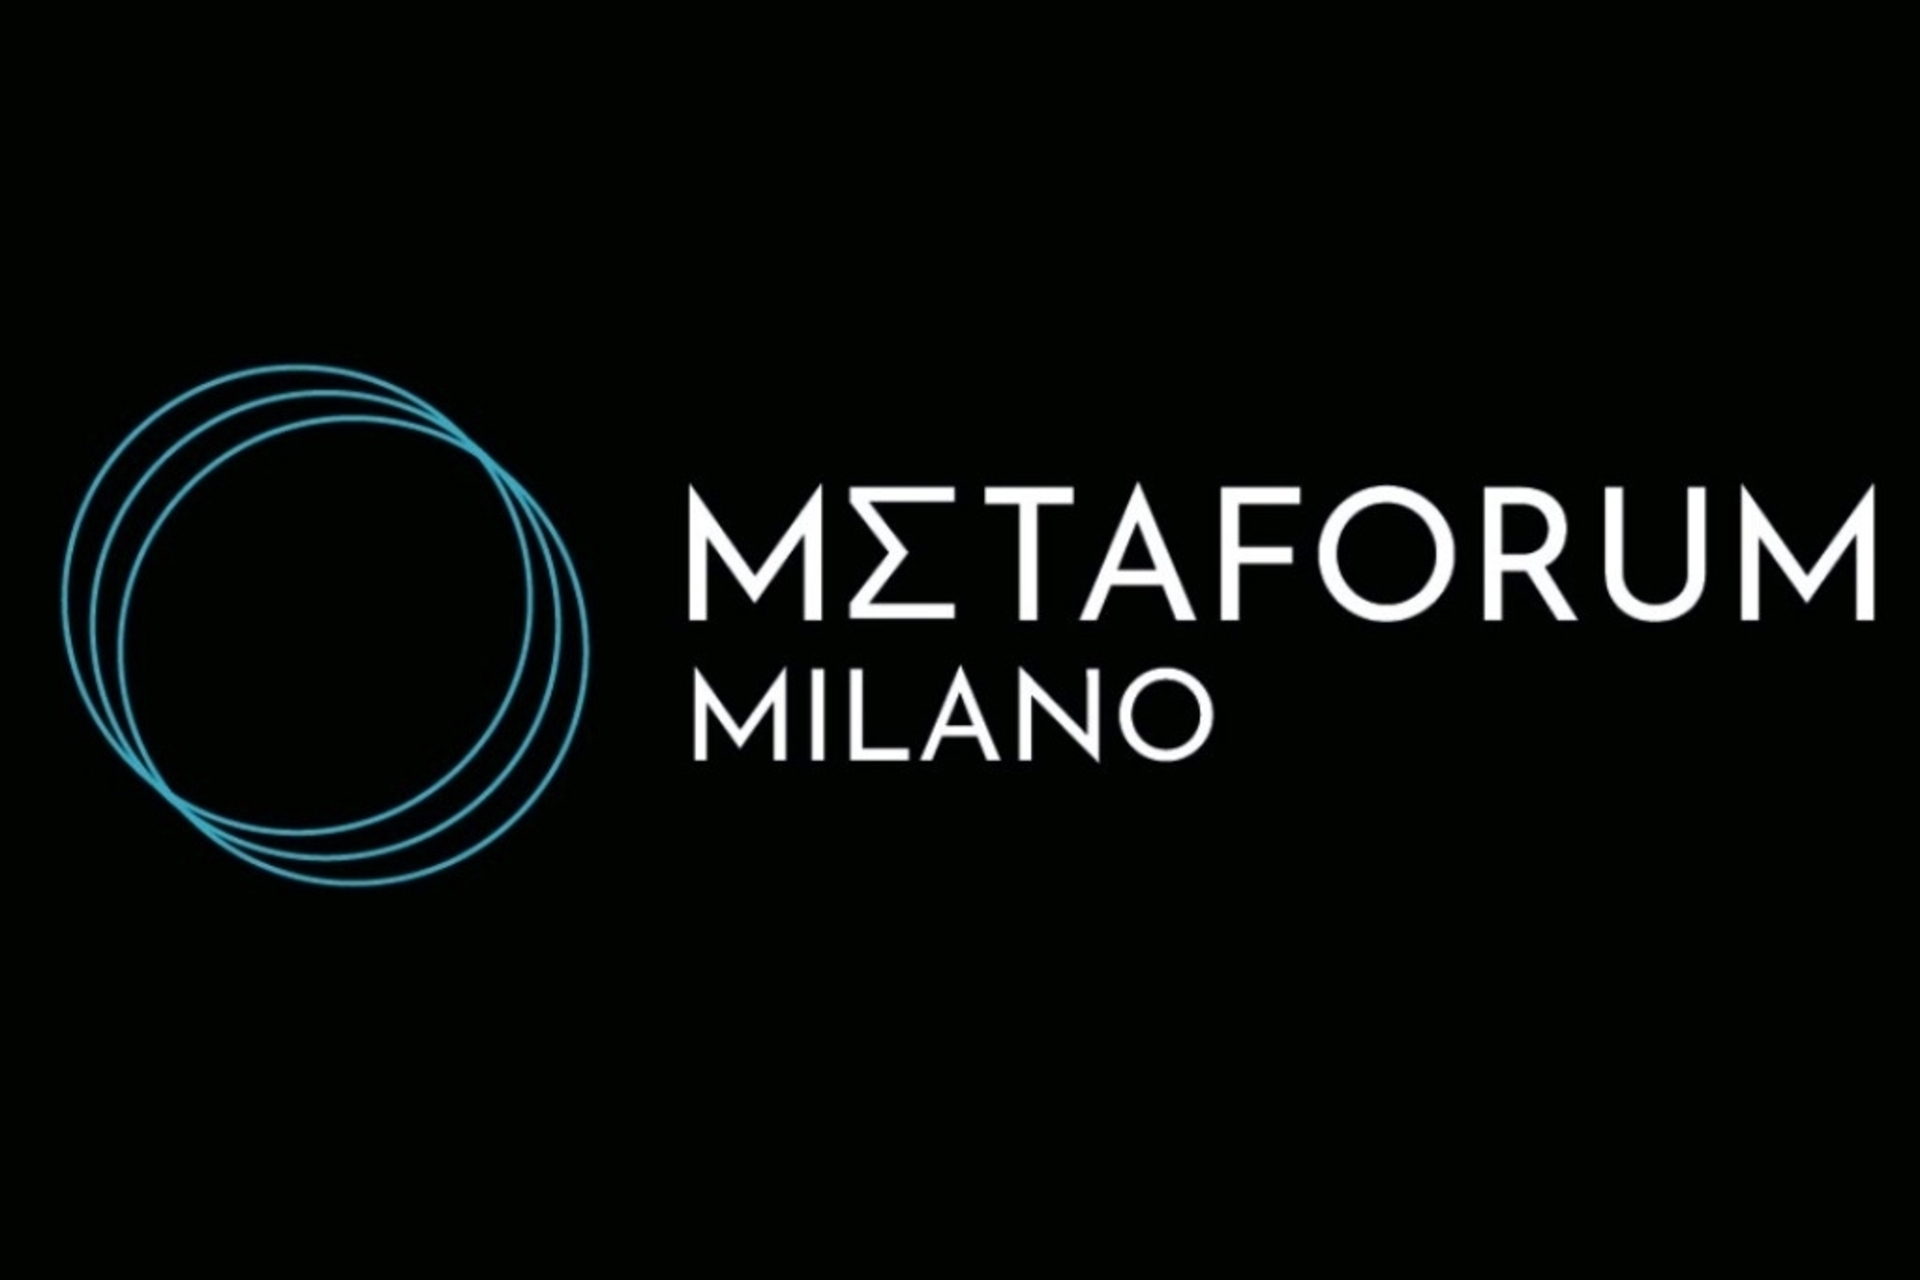 Metaforum: das Logo des Metaforum Milano